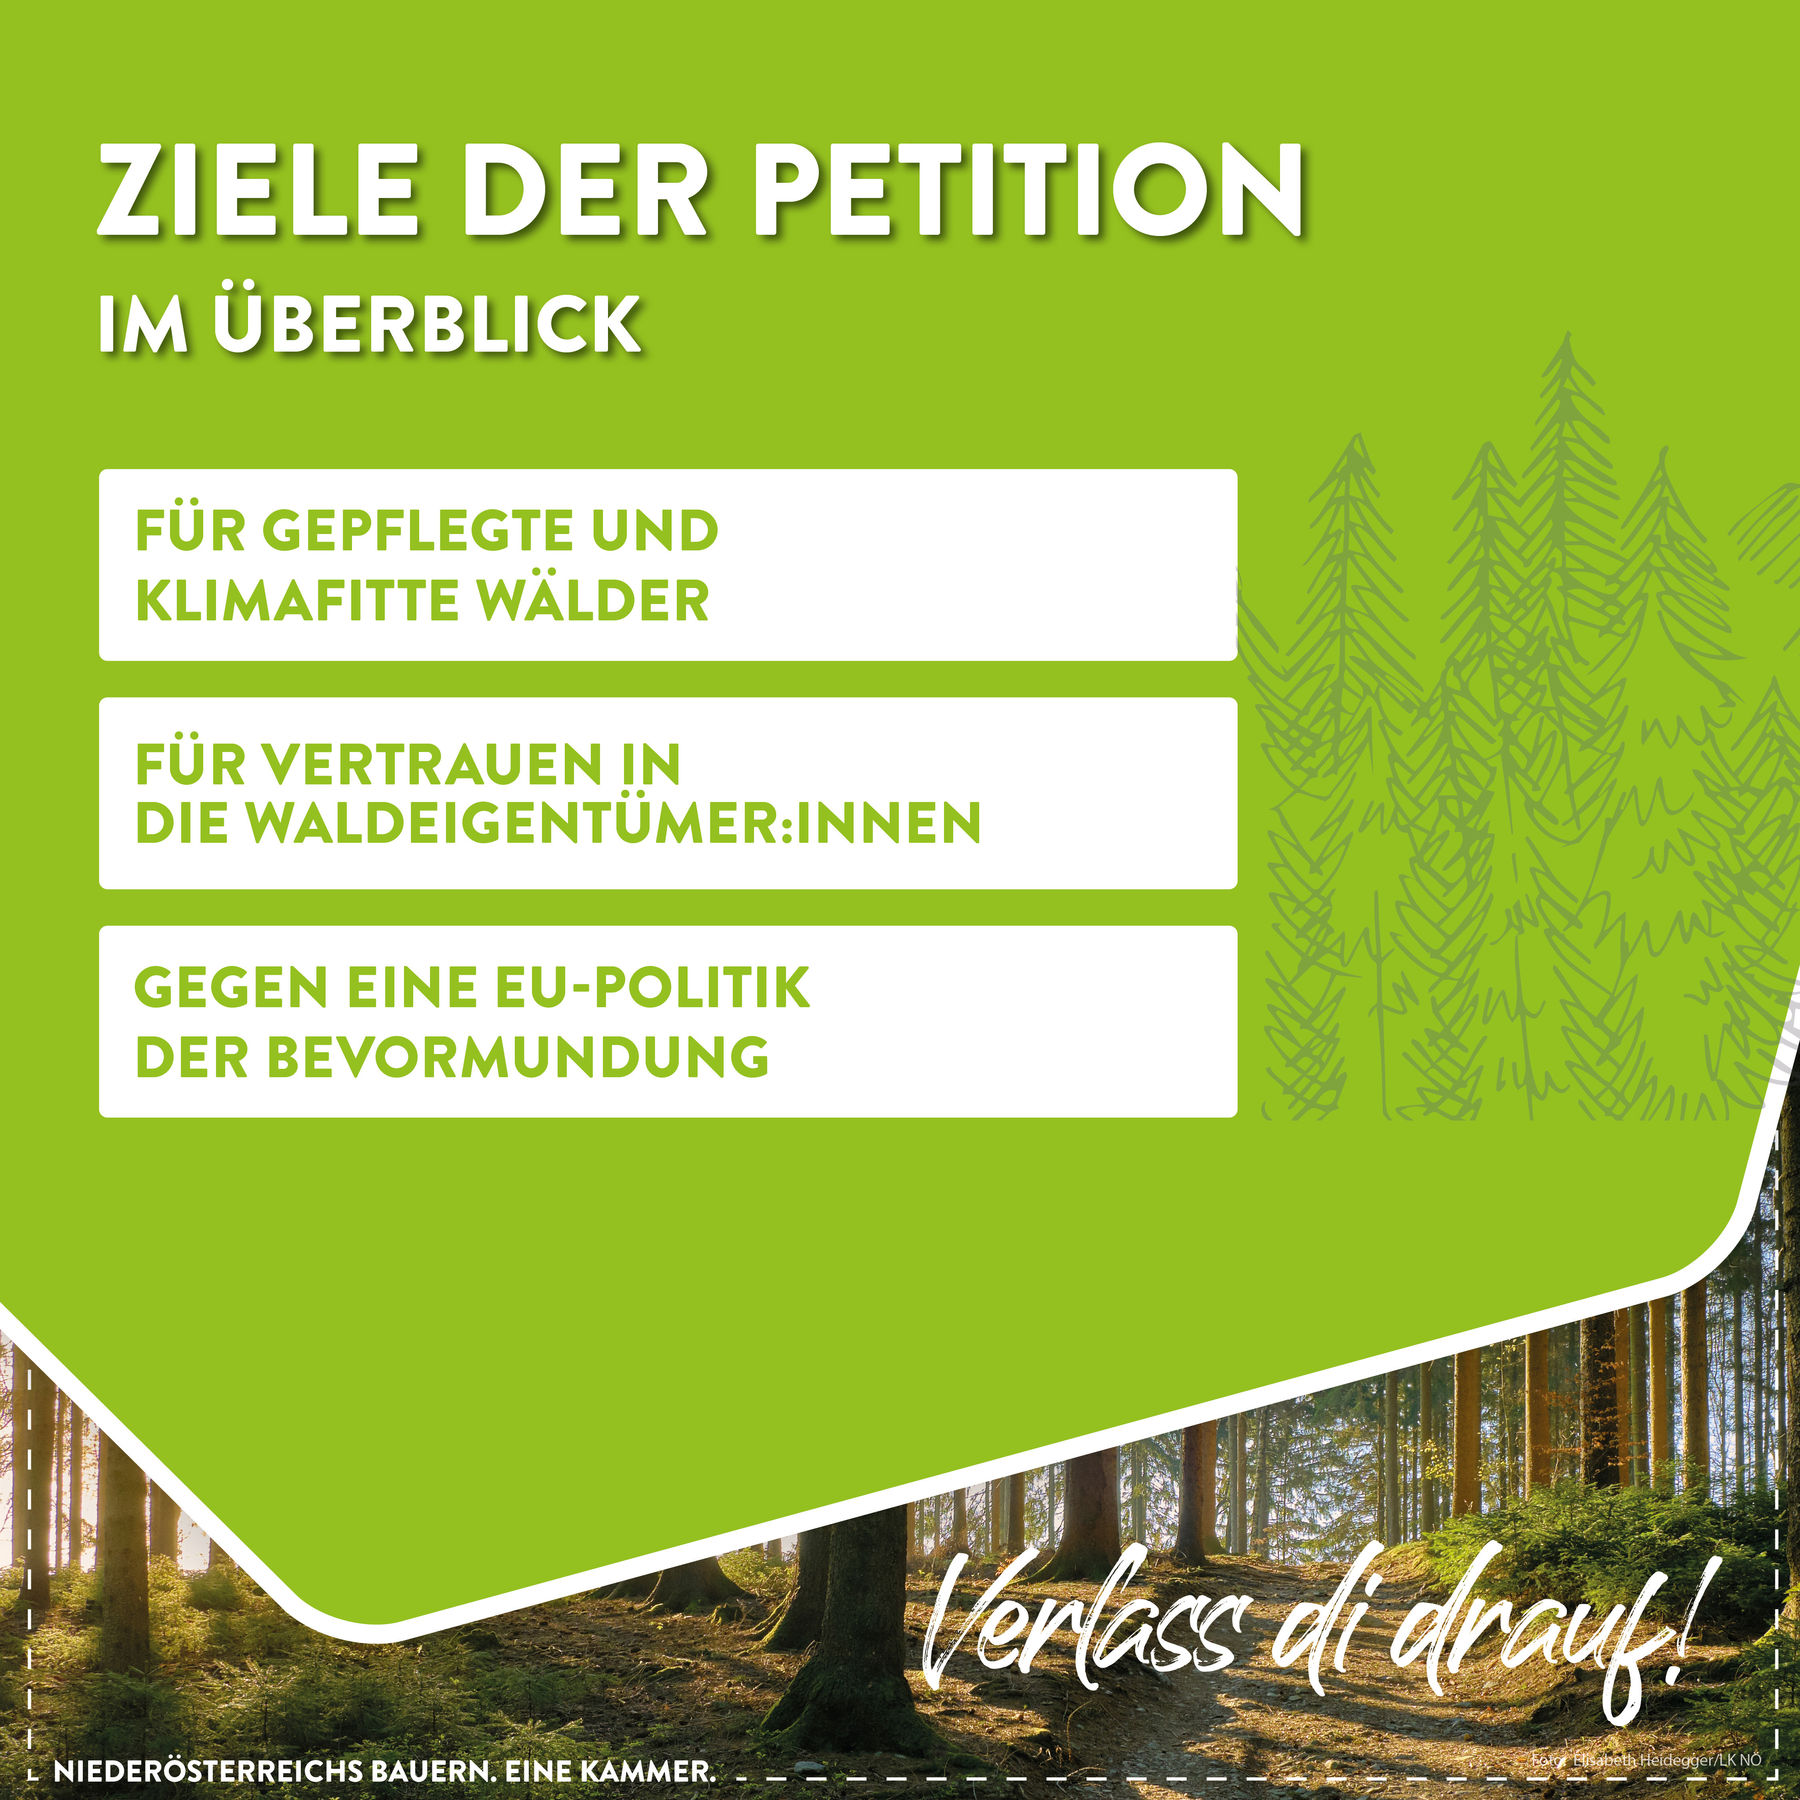 Posting Petition Wald2.jpg